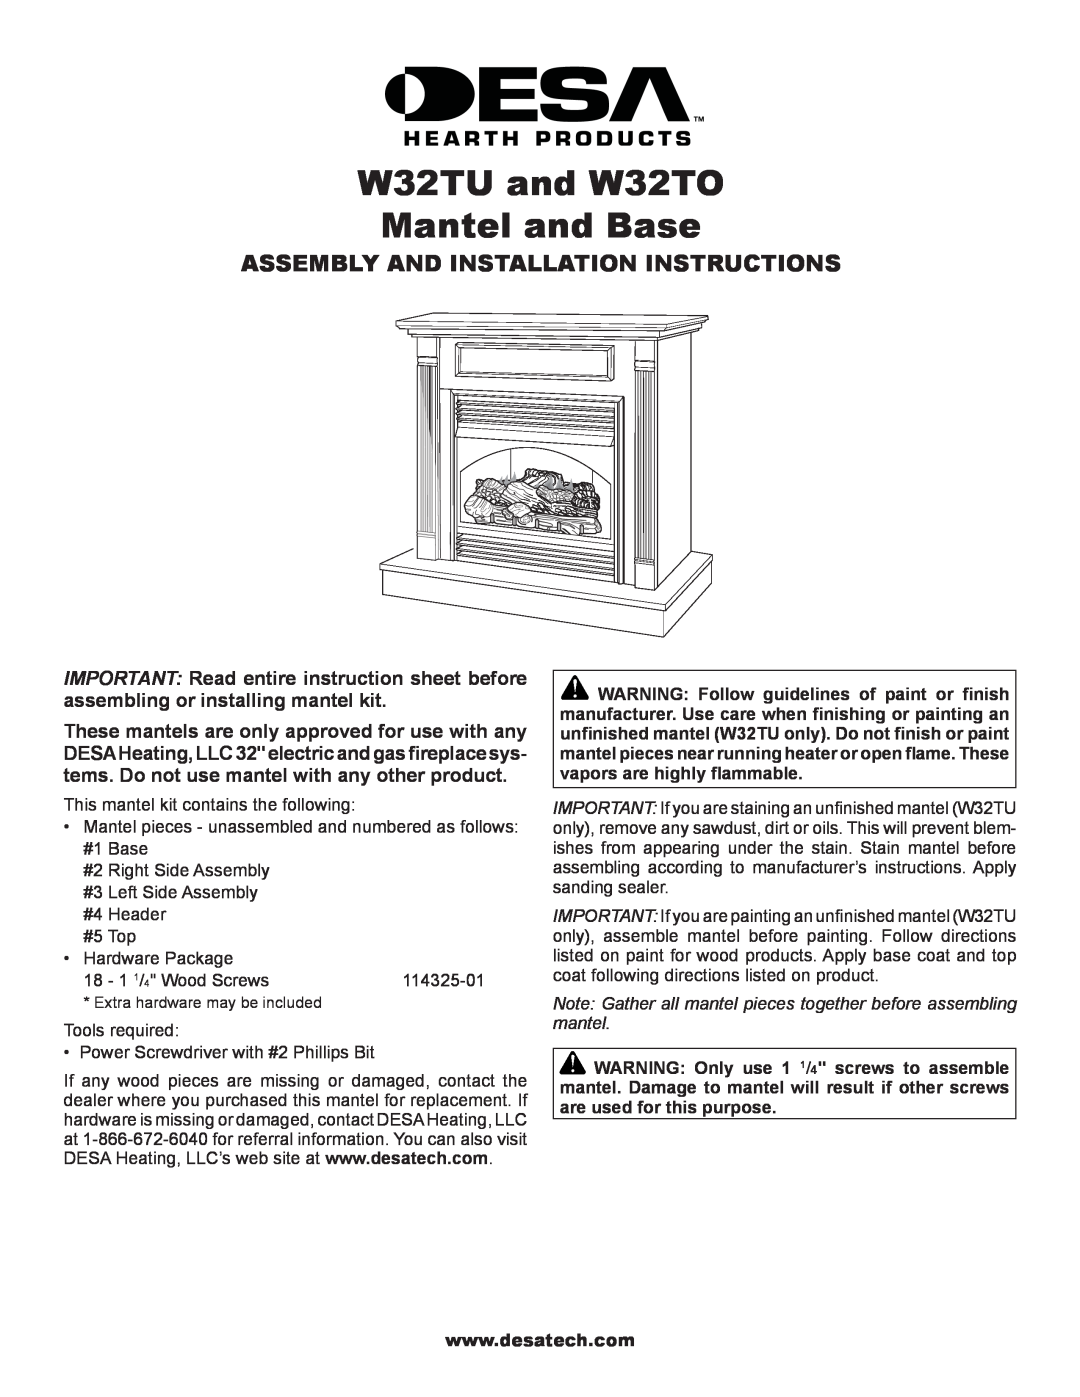 Desa installation instructions W32TU and W32TO Mantel and Base, Assembly And Installation Instructions 